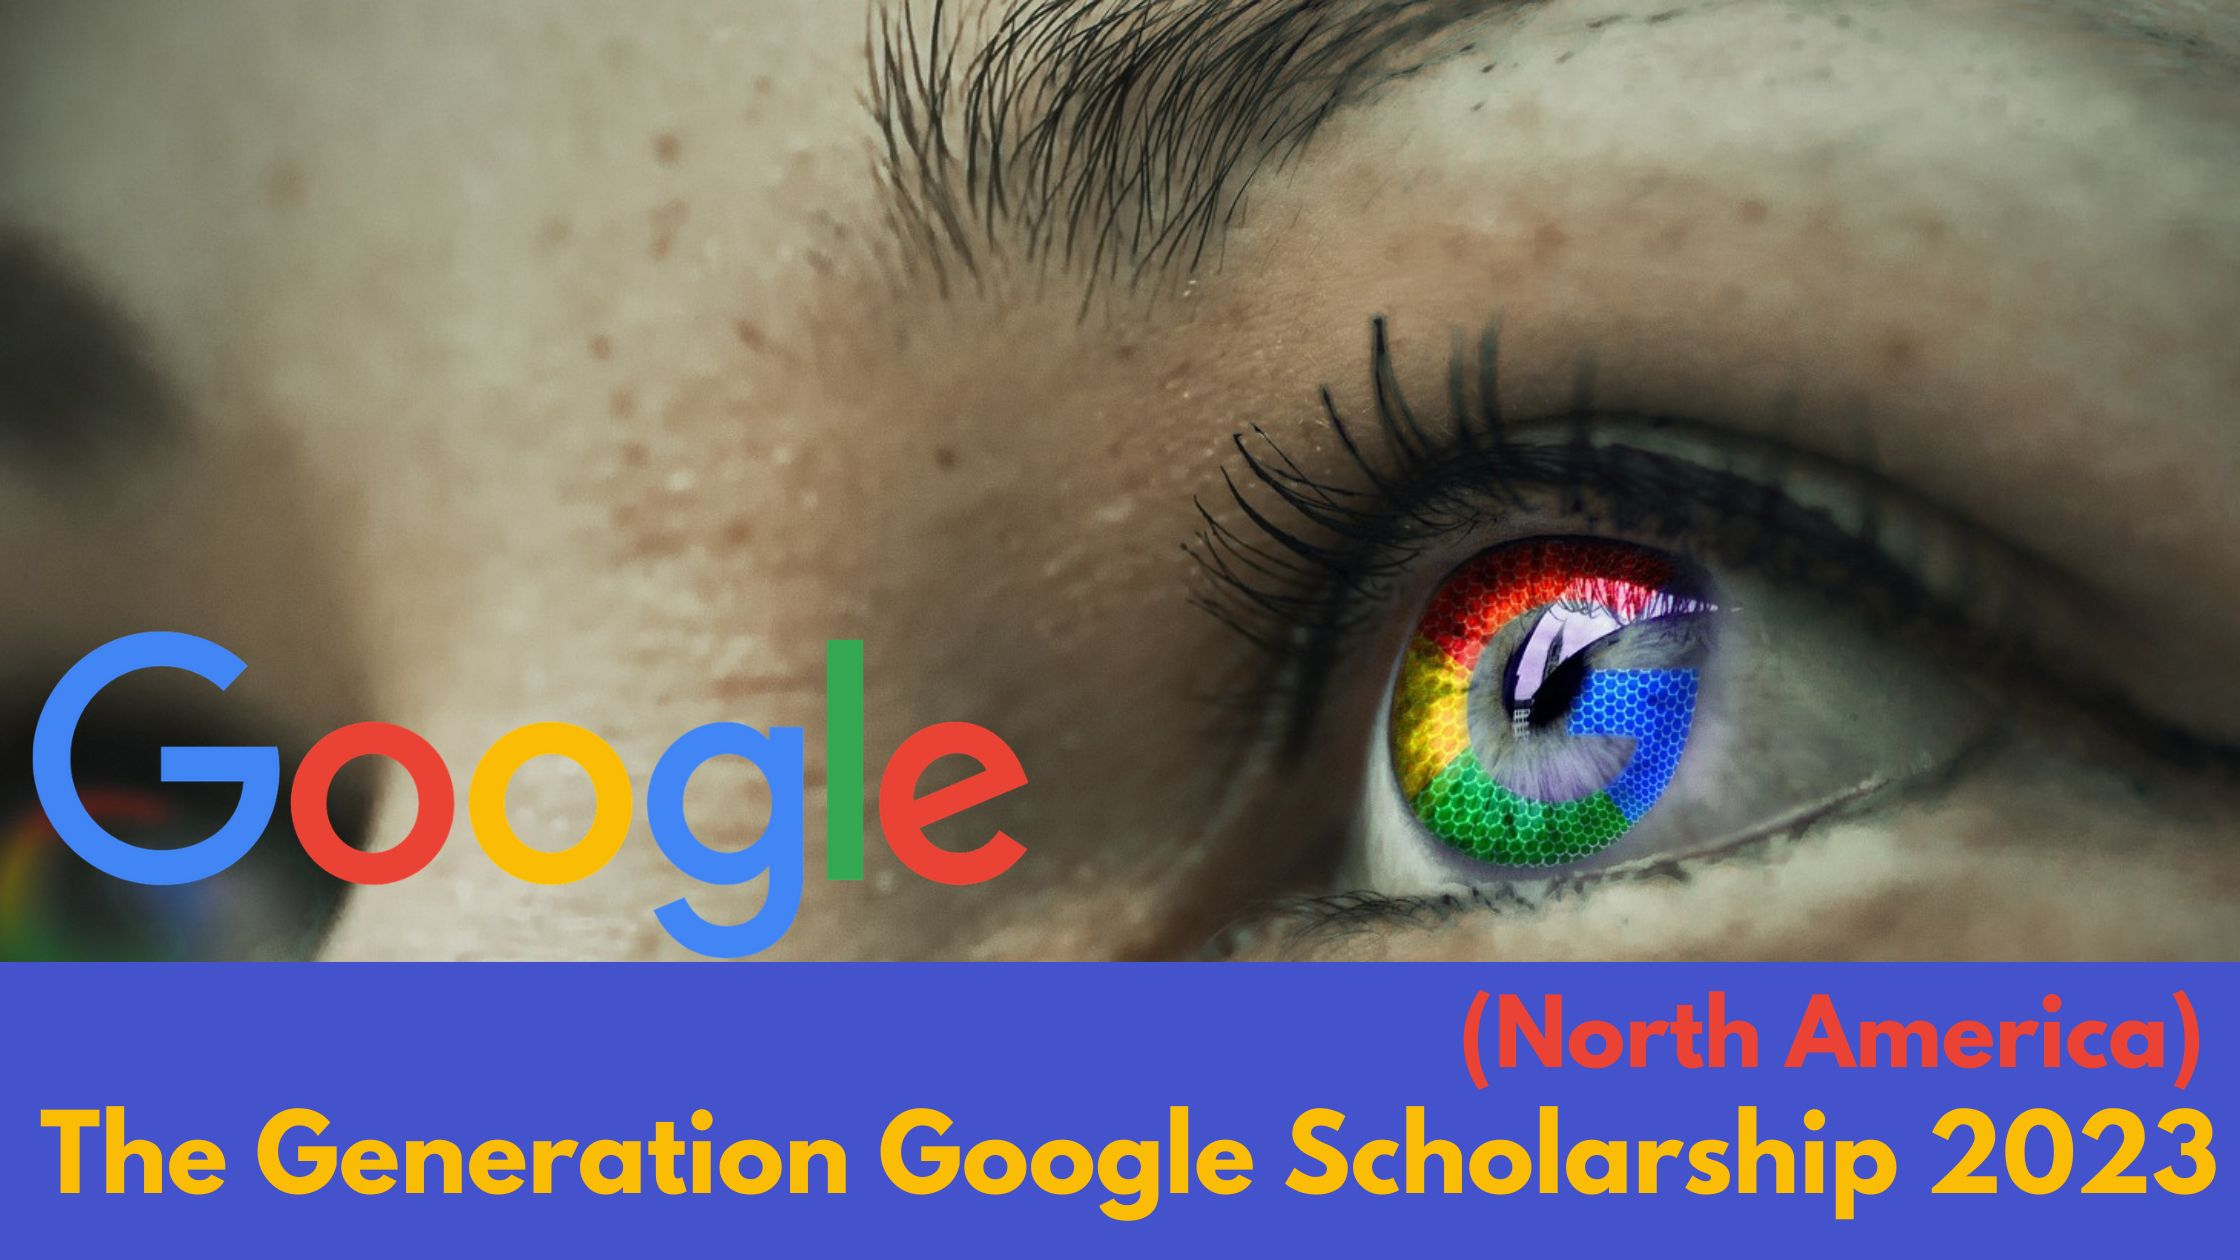 The Generation Google Scholarship 2023